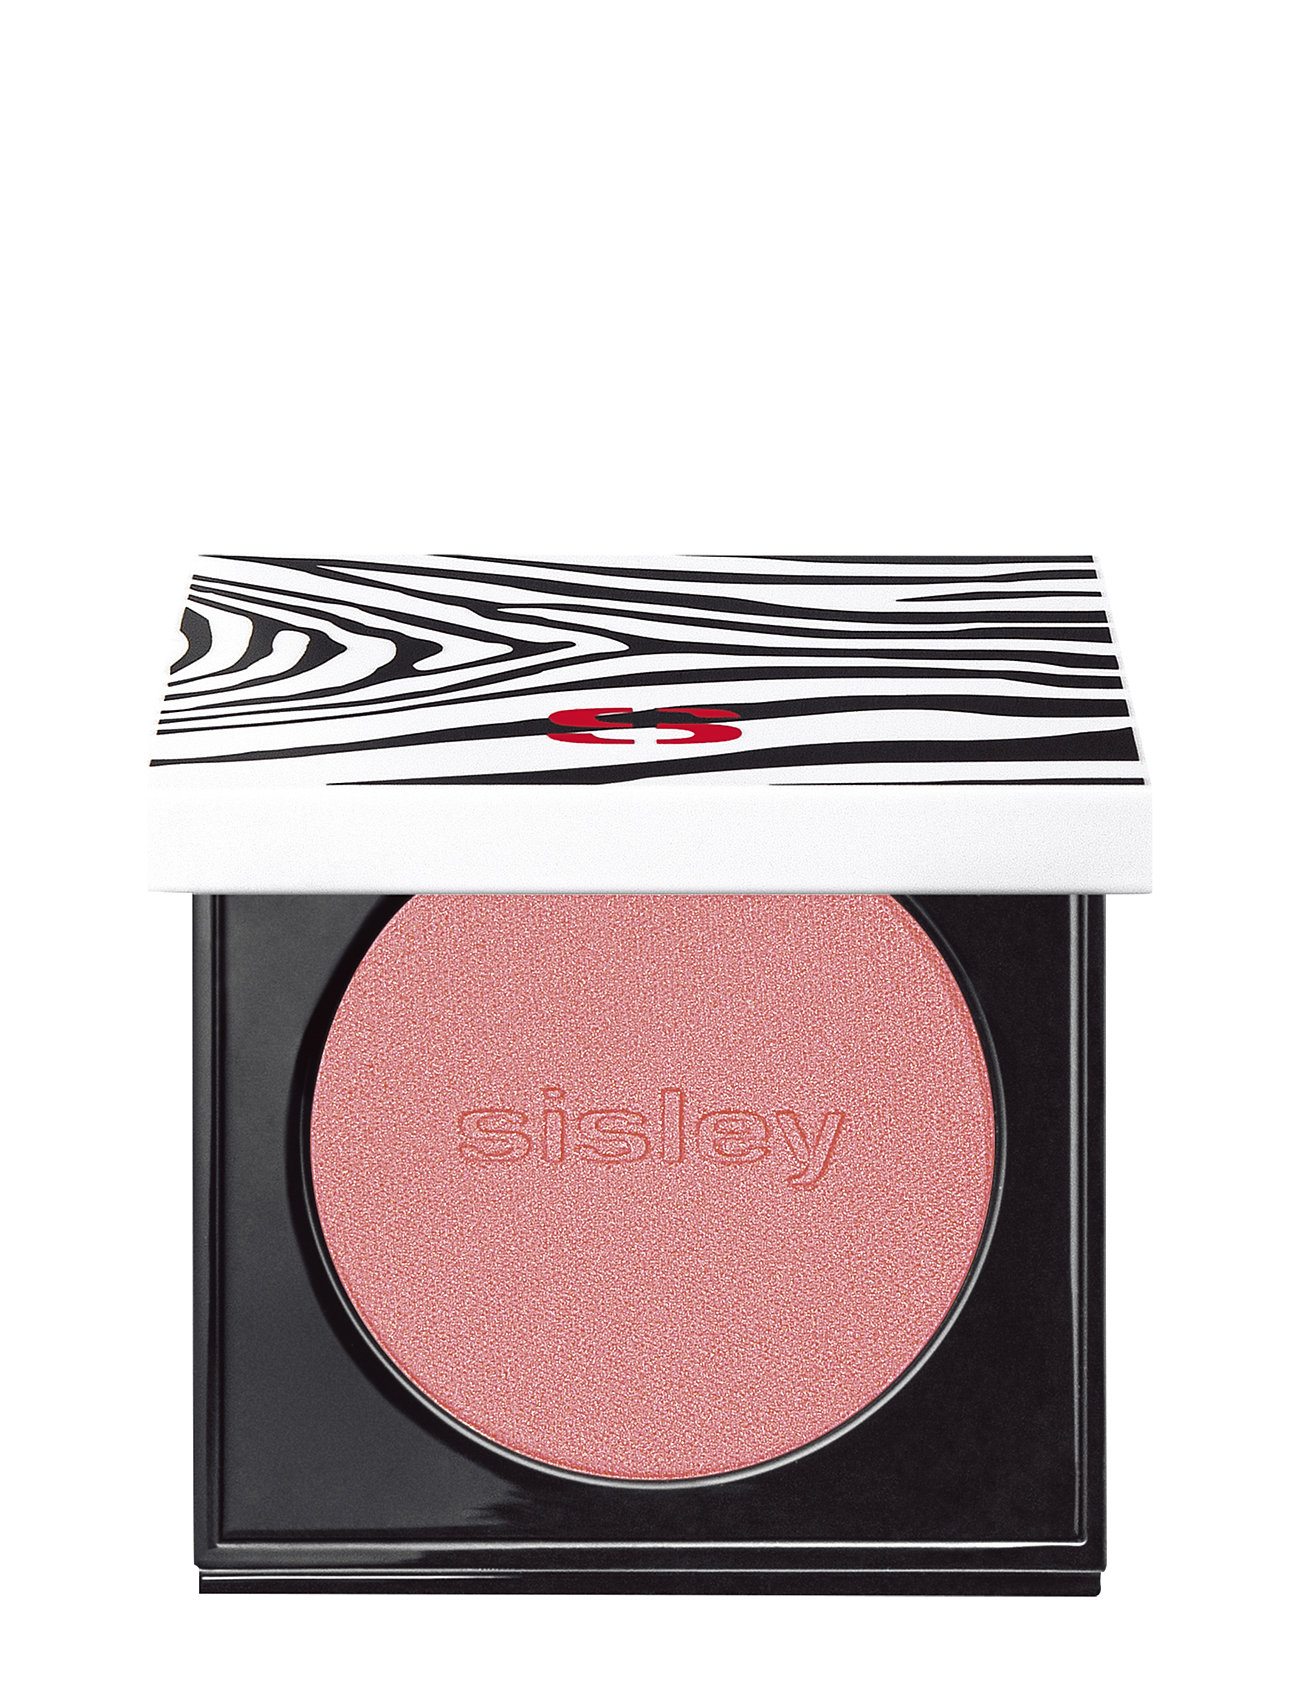 Le Phyto-Blush Beauty WOMEN Makeup Face Blush Vaaleanpunainen Sisley